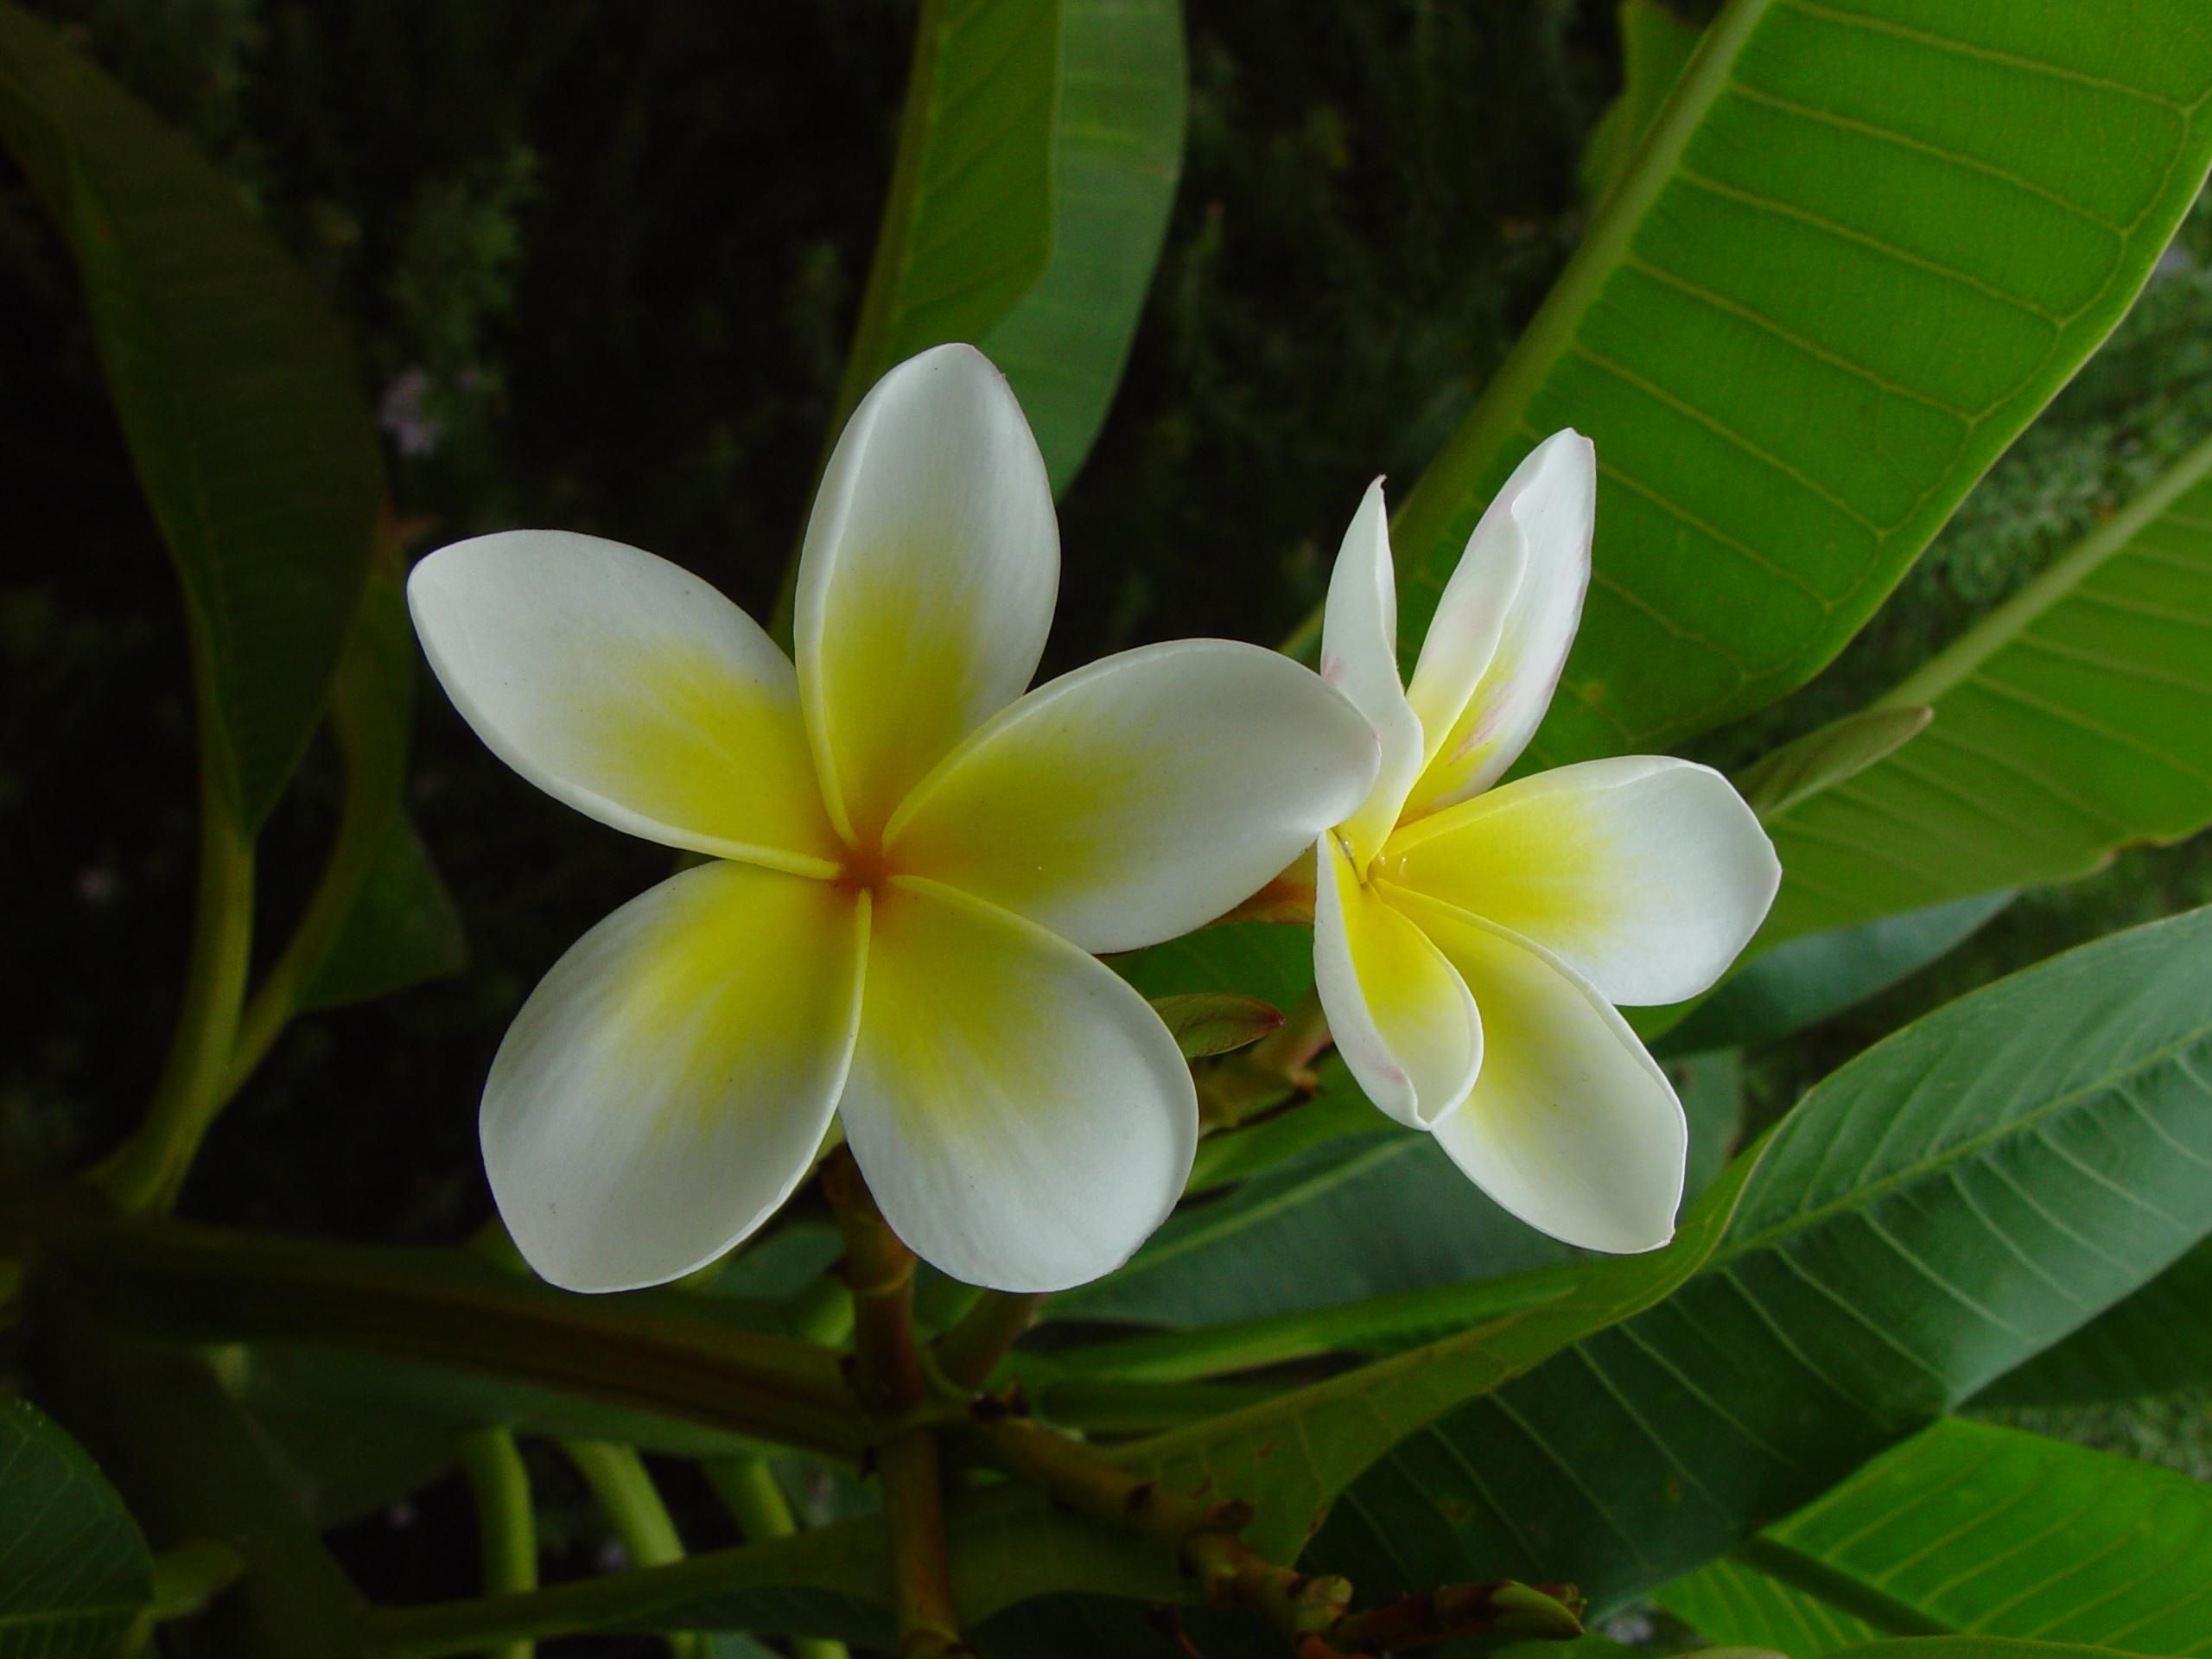 File:Frangipani flower plumeria.jpg - Wikimedia Commons